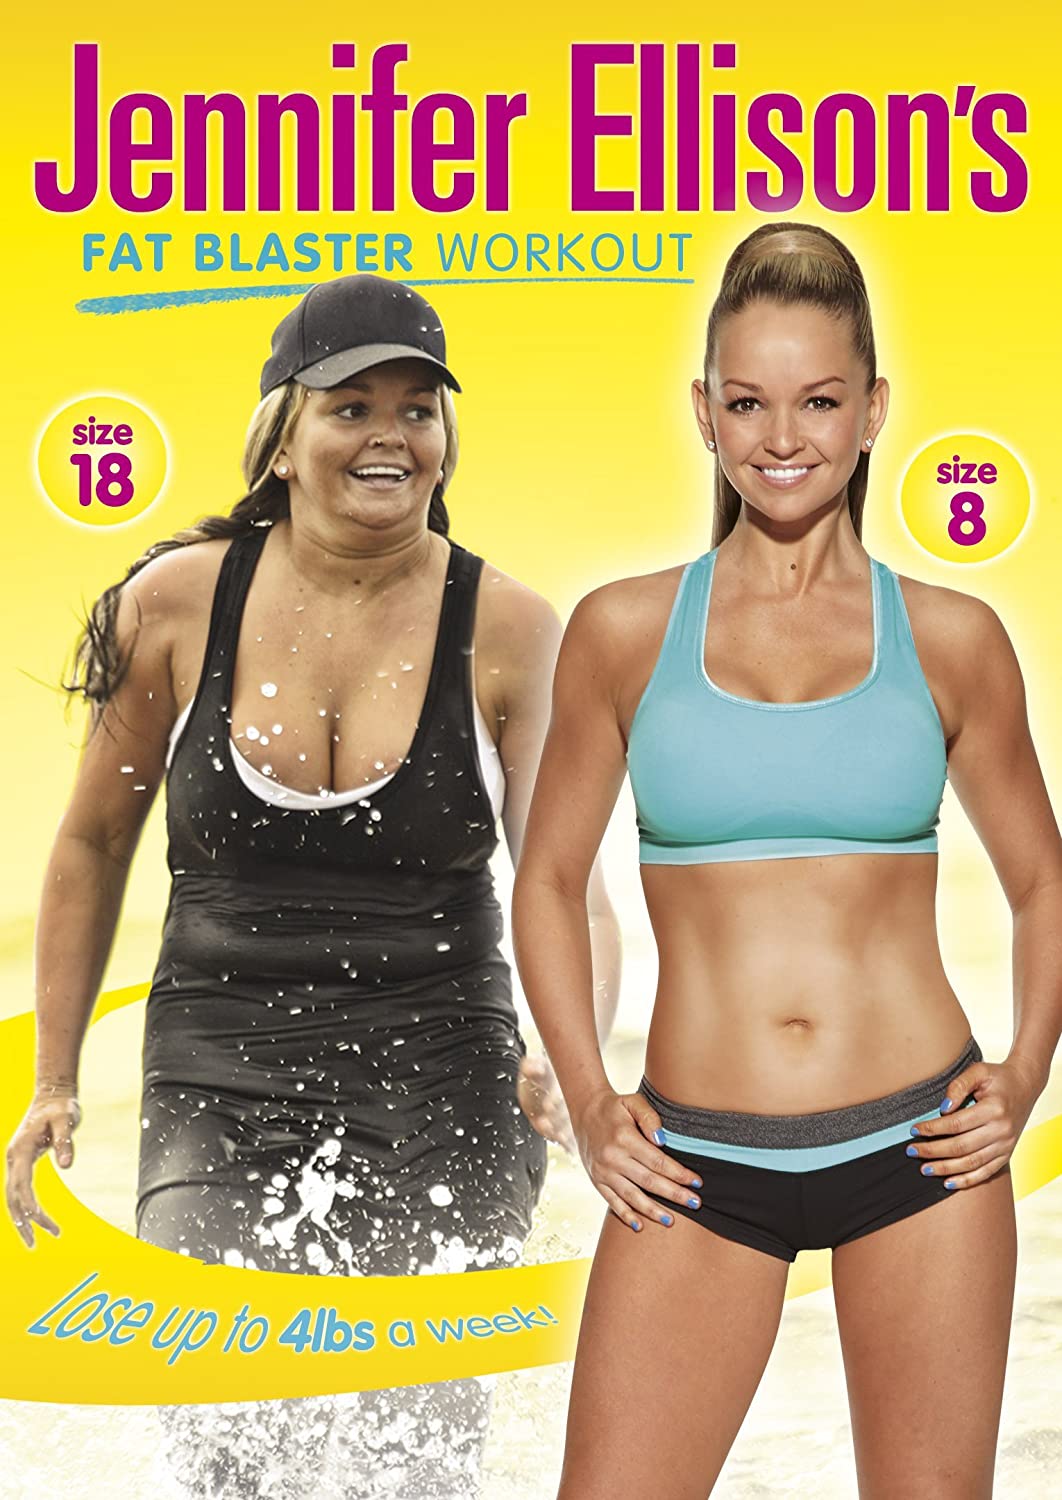 Jennifer Ellison's Fat Blaster Workout [DVD]